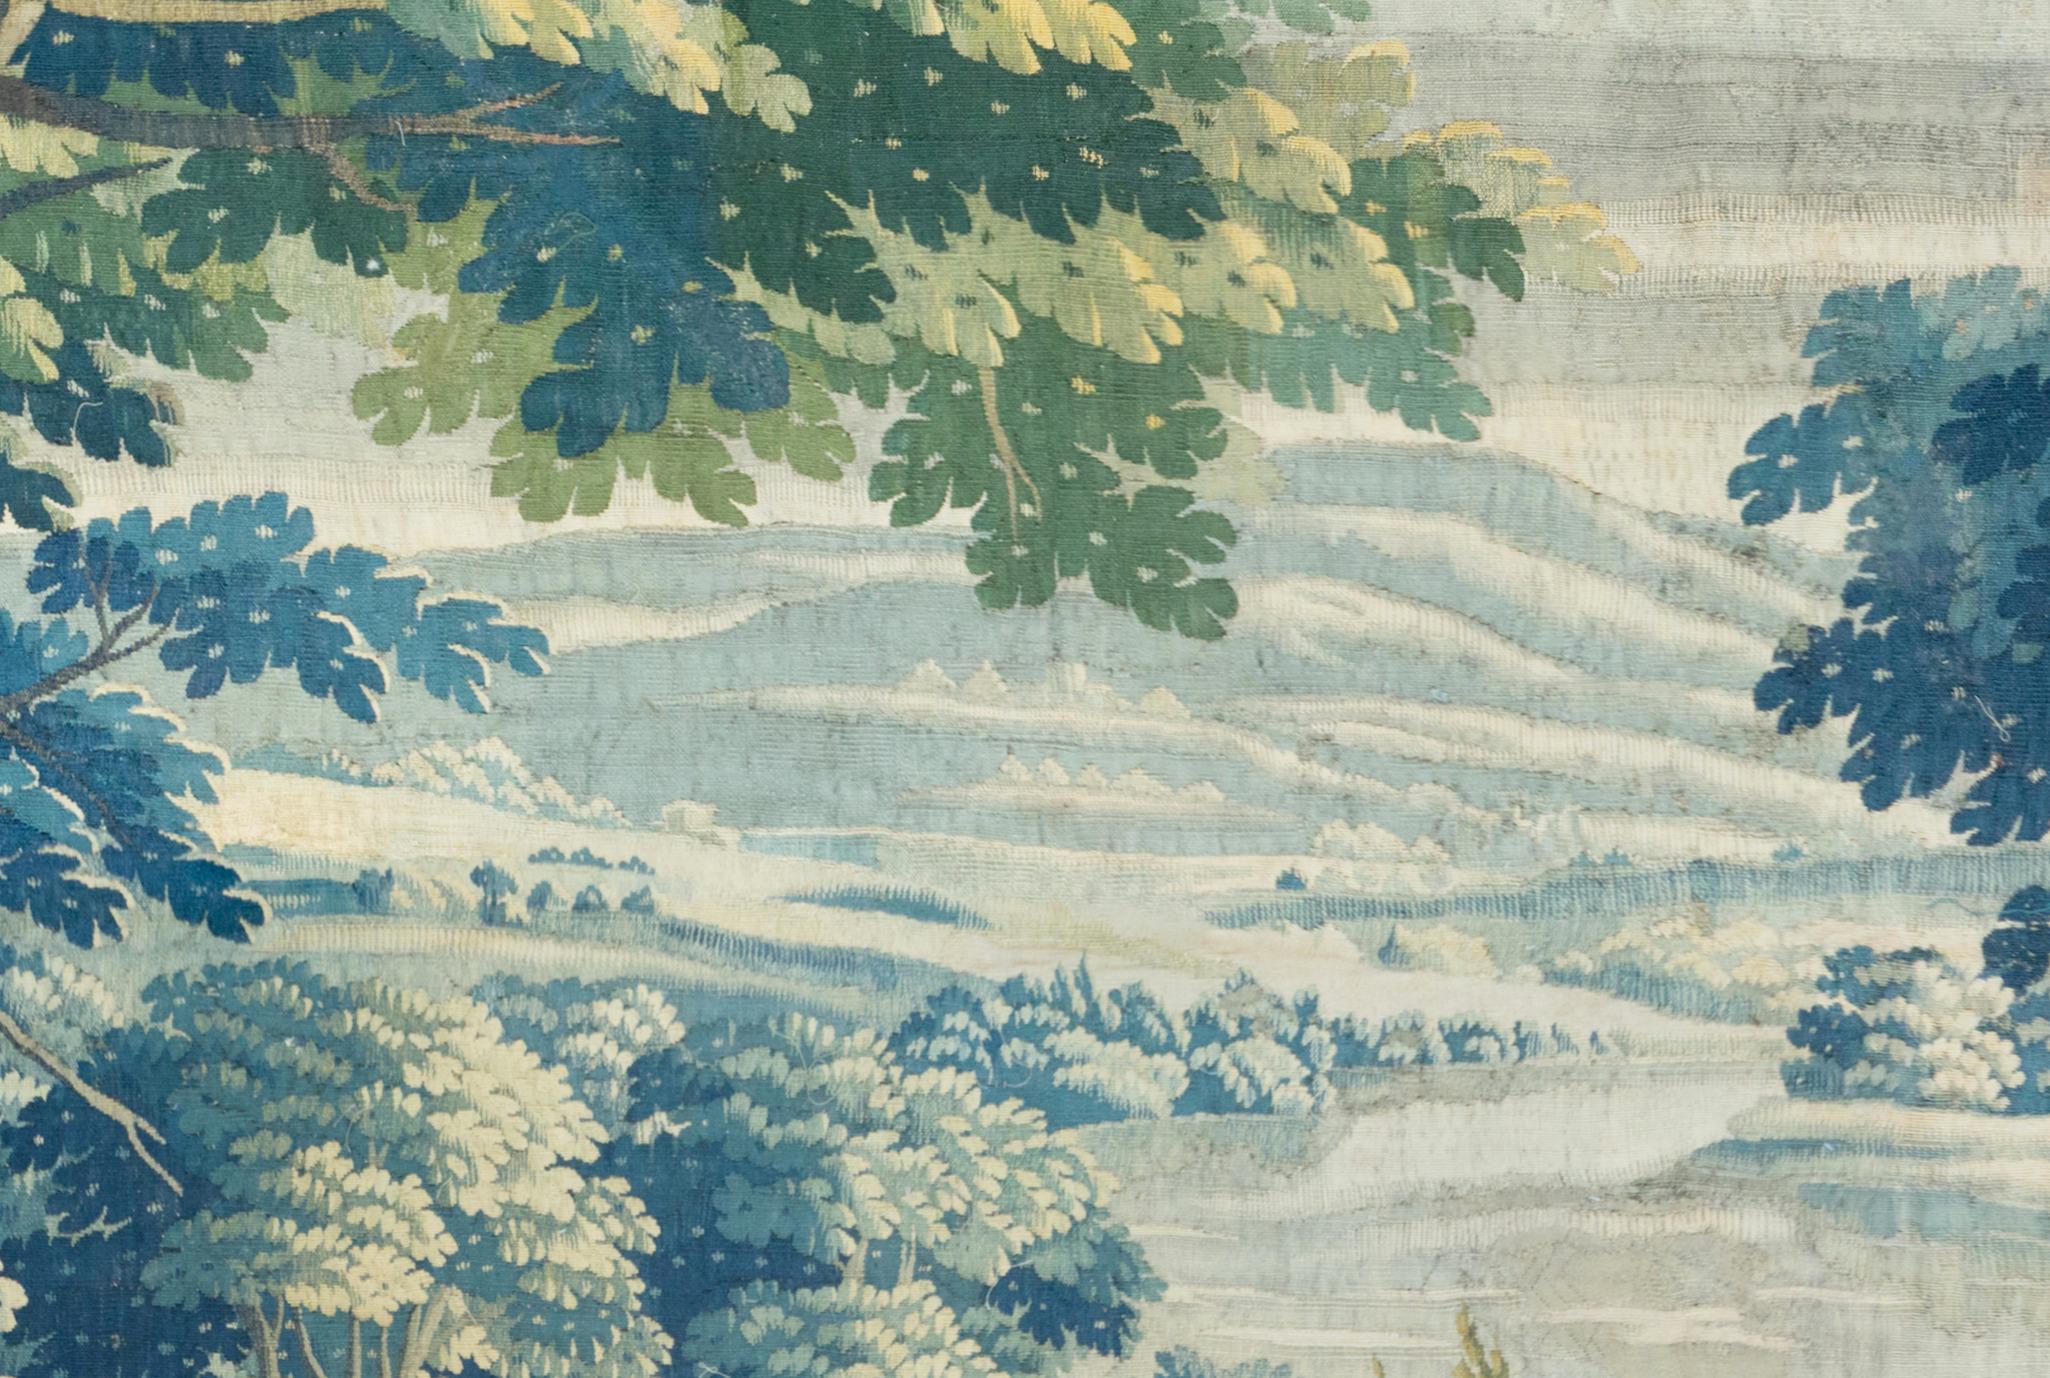 Hand-Woven Antique Late 17th Century Flemish Verdure Landscape Tapestry